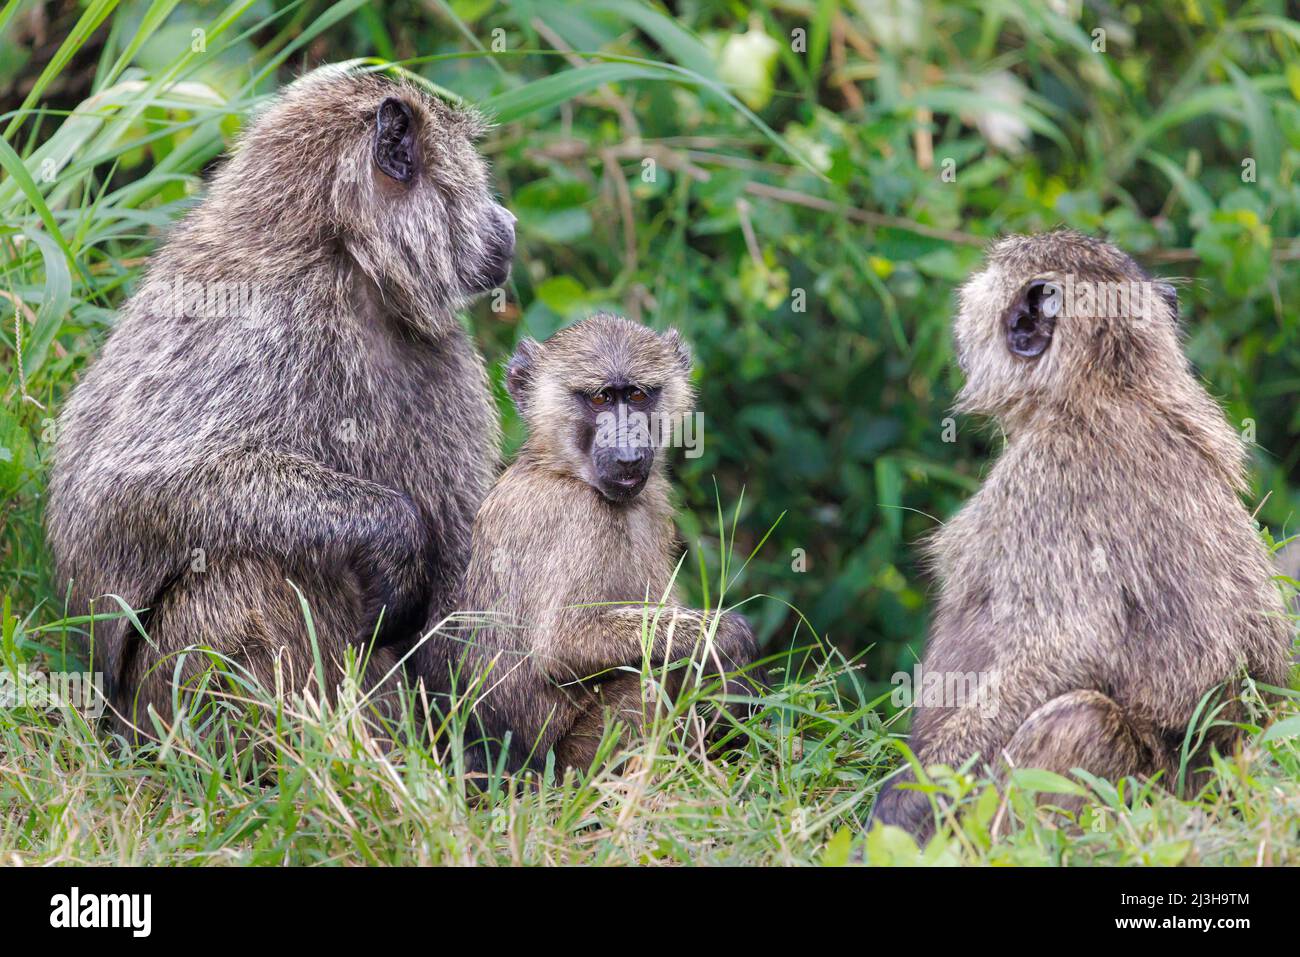 Uganda, distretto di Rubirizi, Katunguru, Parco Nazionale della Regina Elisabetta, baboon Foto Stock